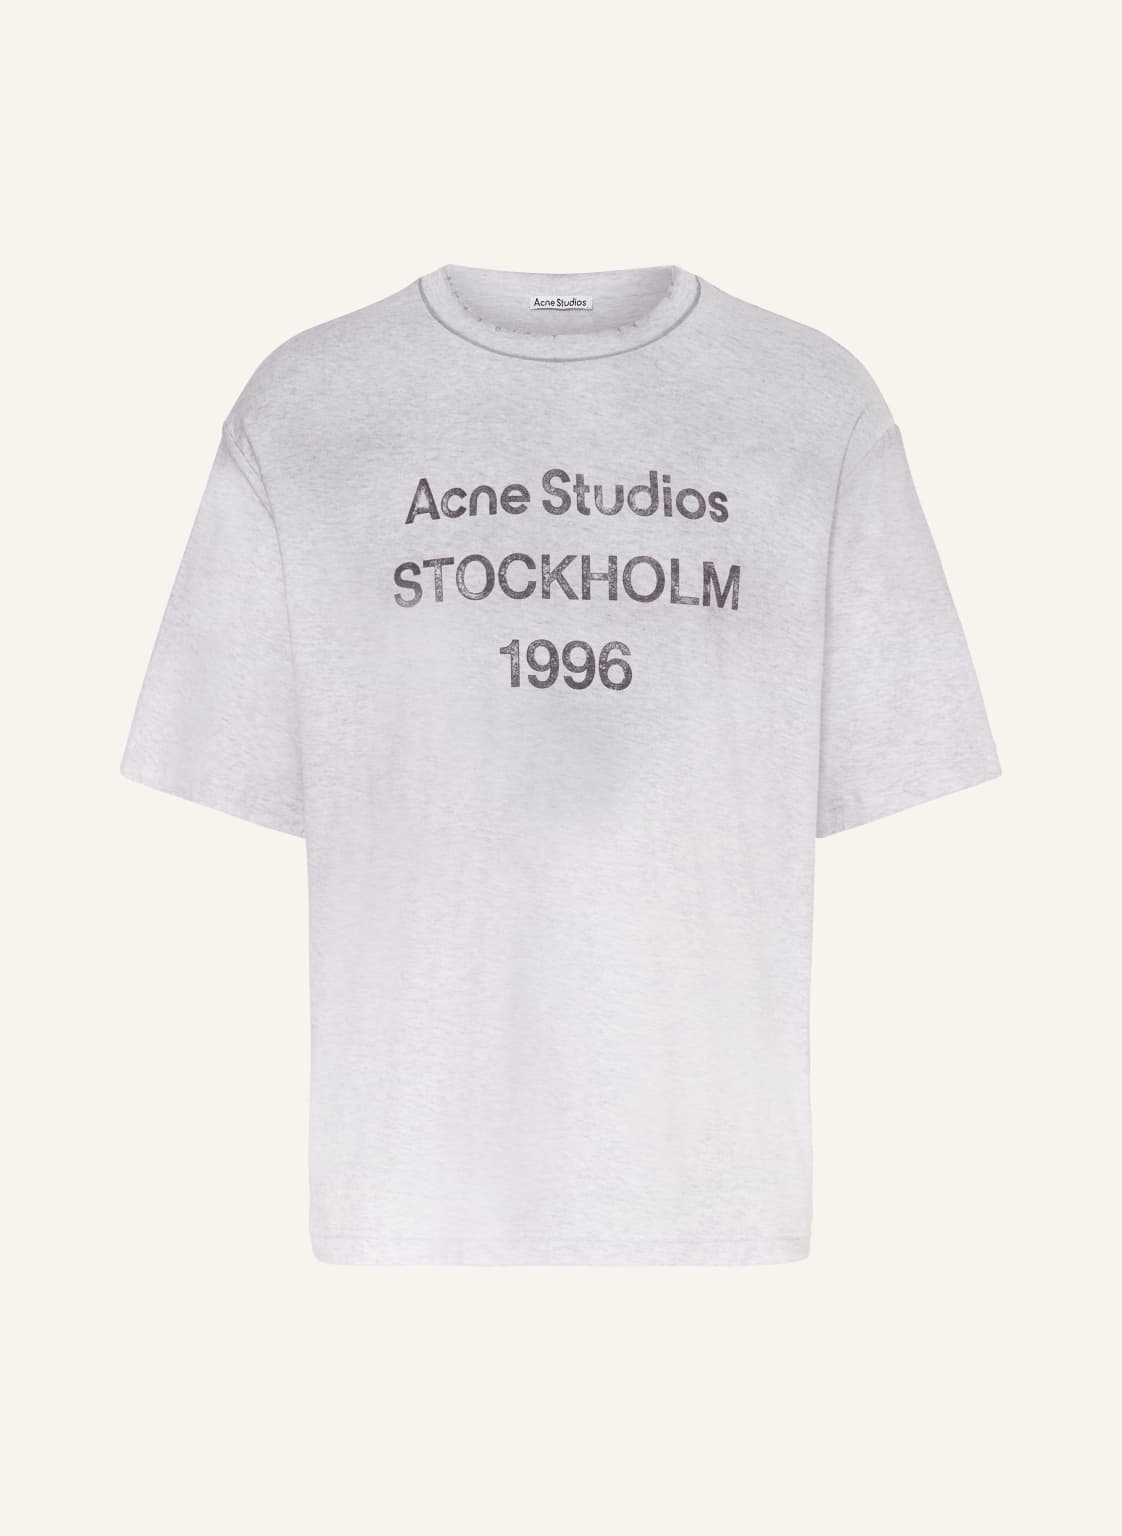 Acne Studios T-Shirt grau von Acne Studios